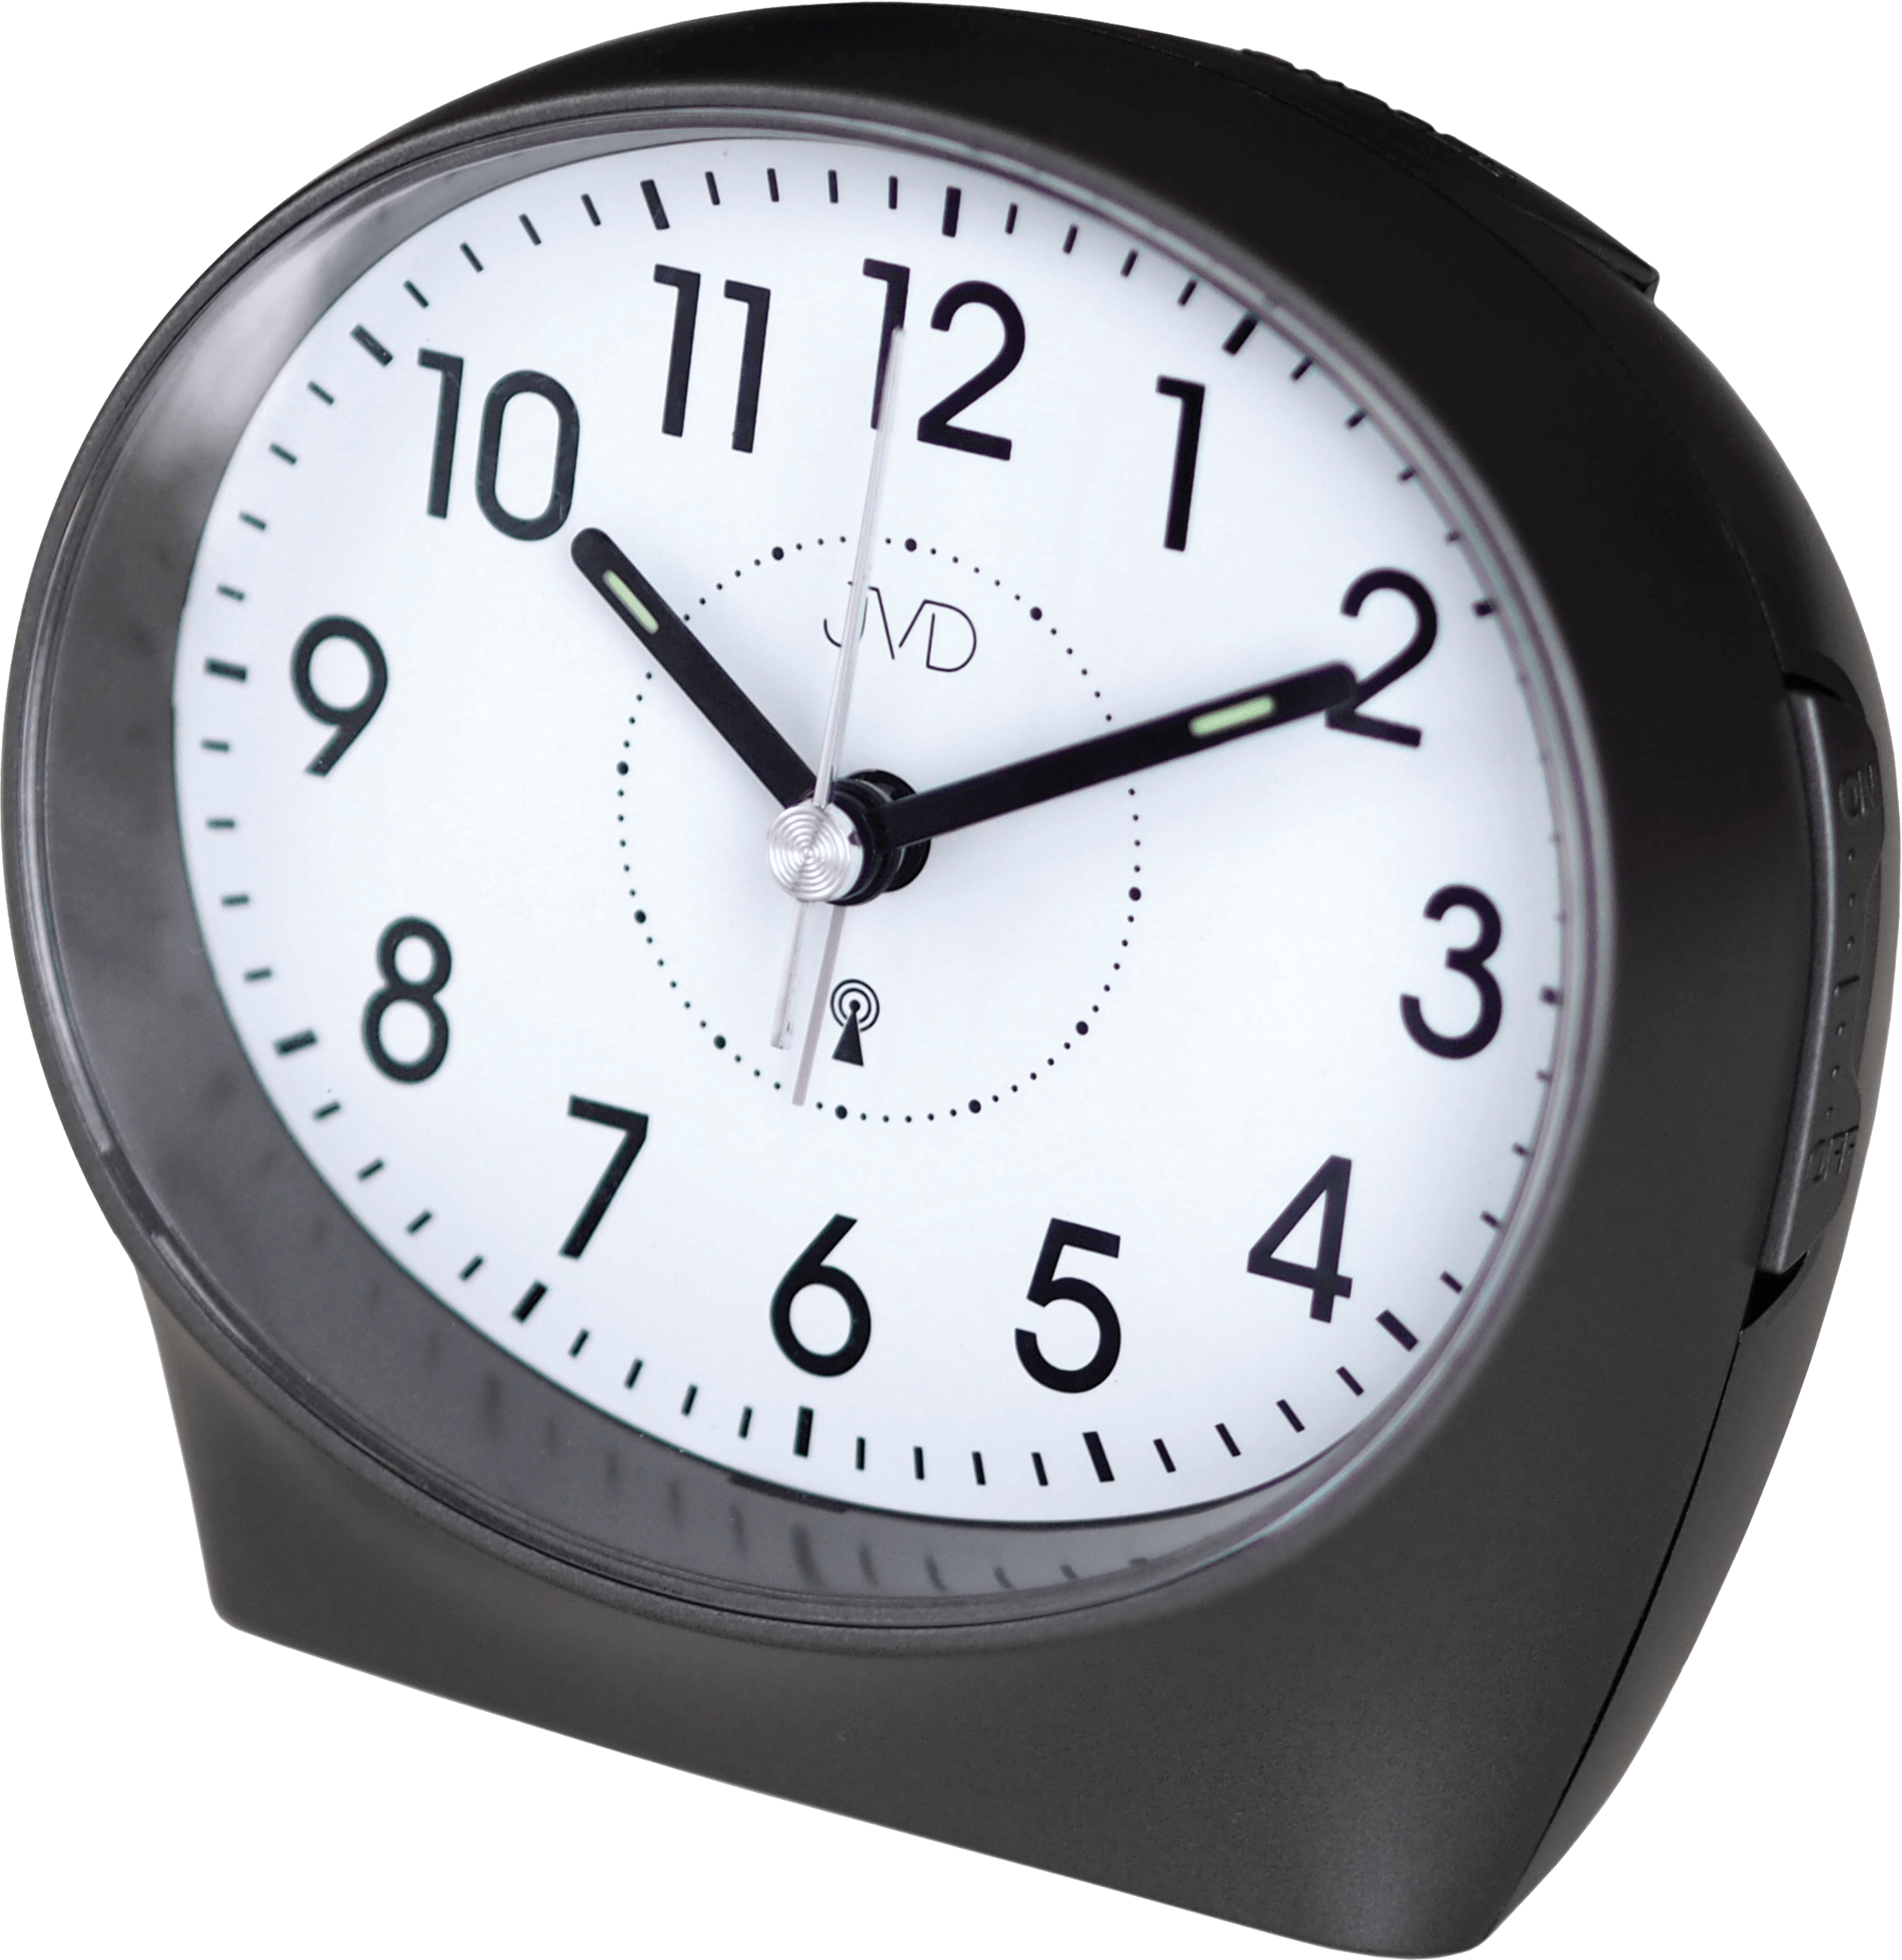 Digital Alarm Clock Jvd Ed Rb856 Funkwecker Analog